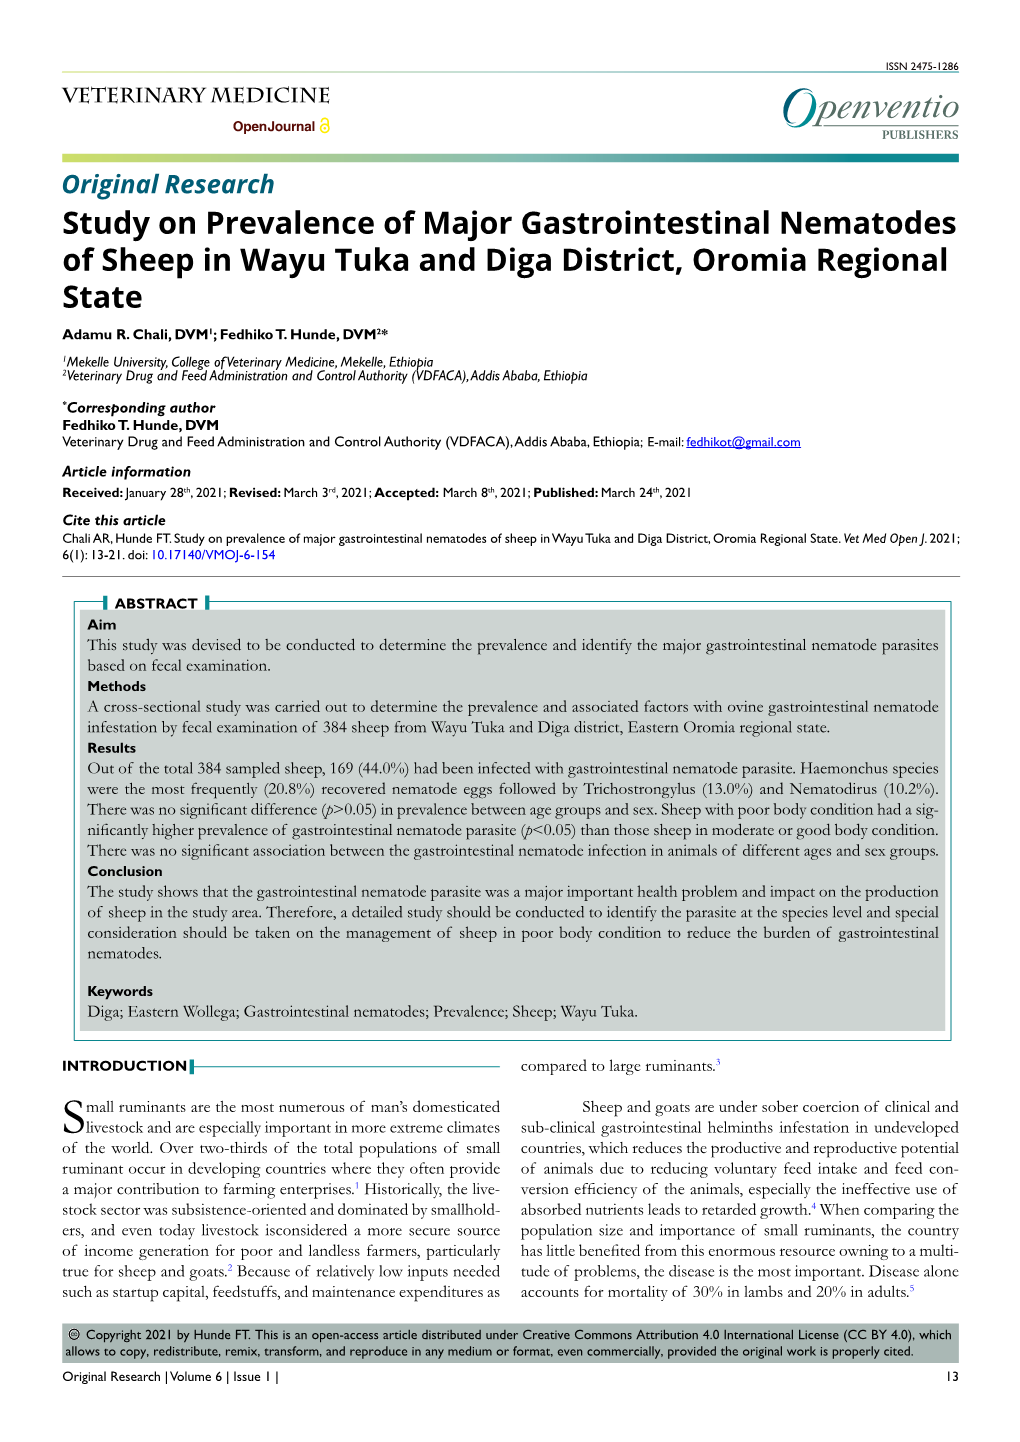 Study on Prevalence of Major Gastrointestinal Nematodes of Sheep in Wayu Tuka and Diga District, Oromia Regional State Adamu R